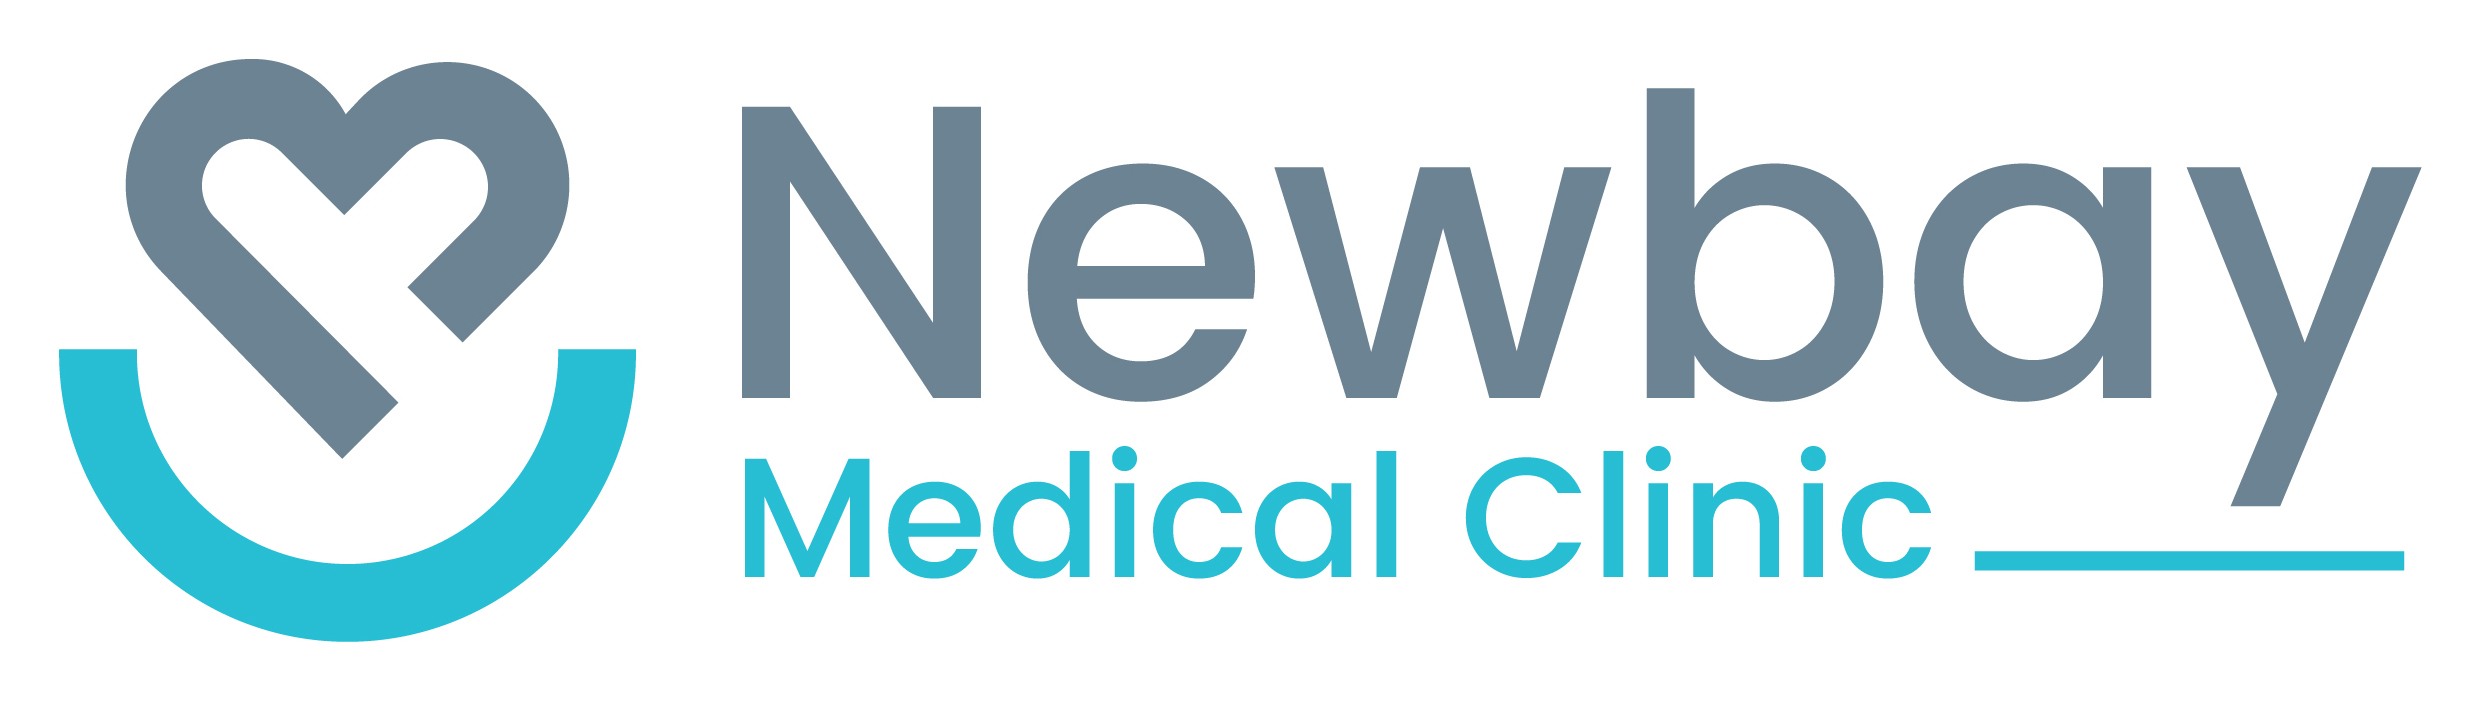 Newbay_Medical_Clinic-Logo-For_Light_Backgrounds